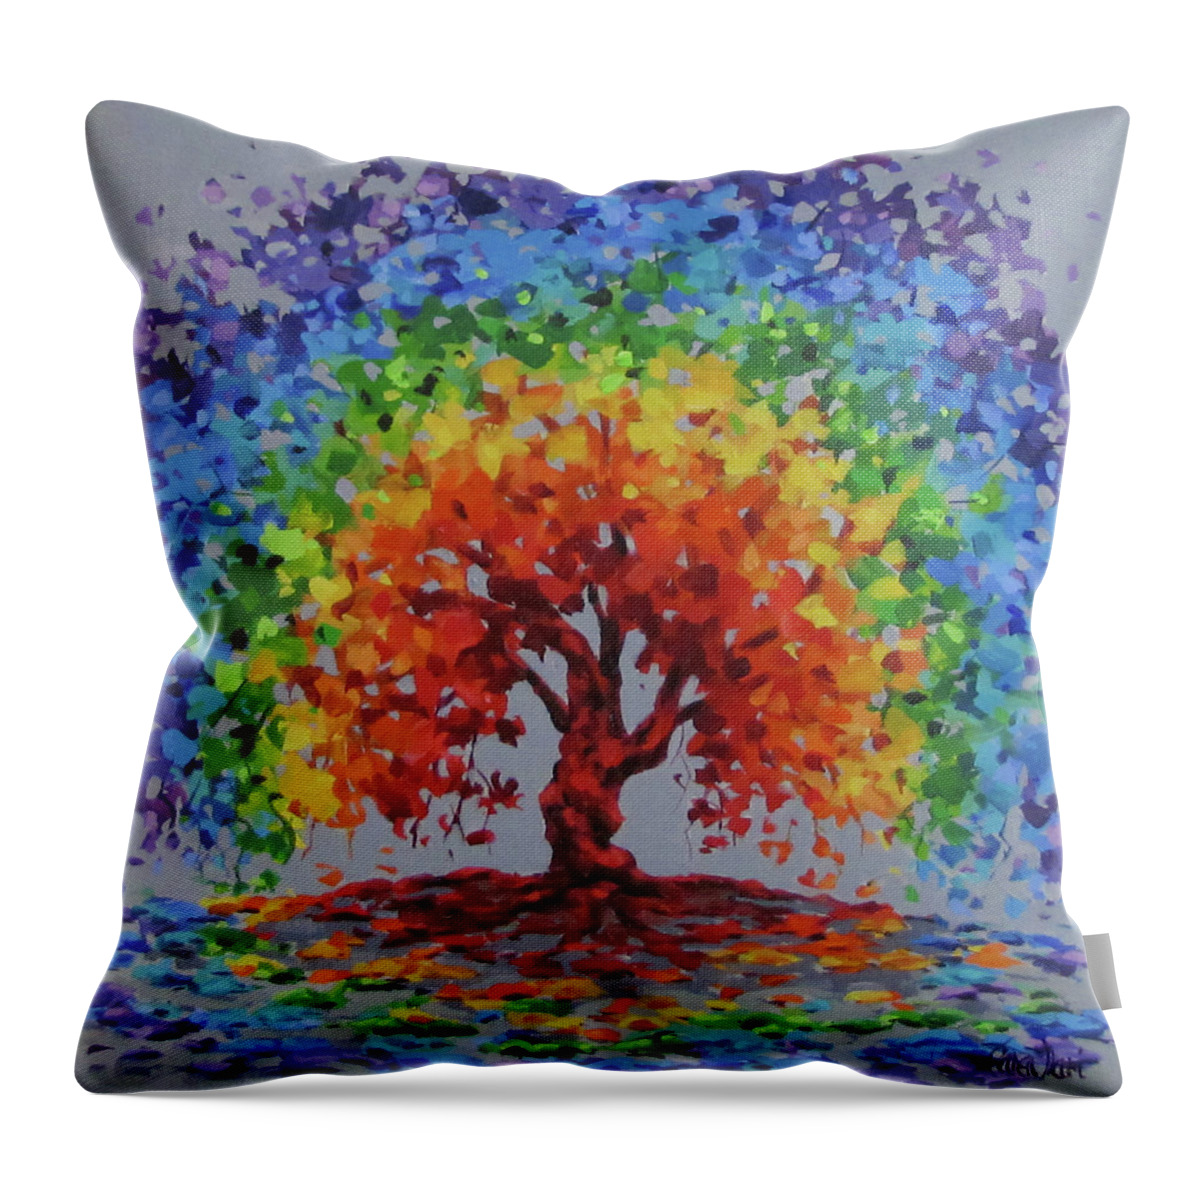 Rainbow Throw Pillow featuring the painting Rainbow Tree by Karen Ilari